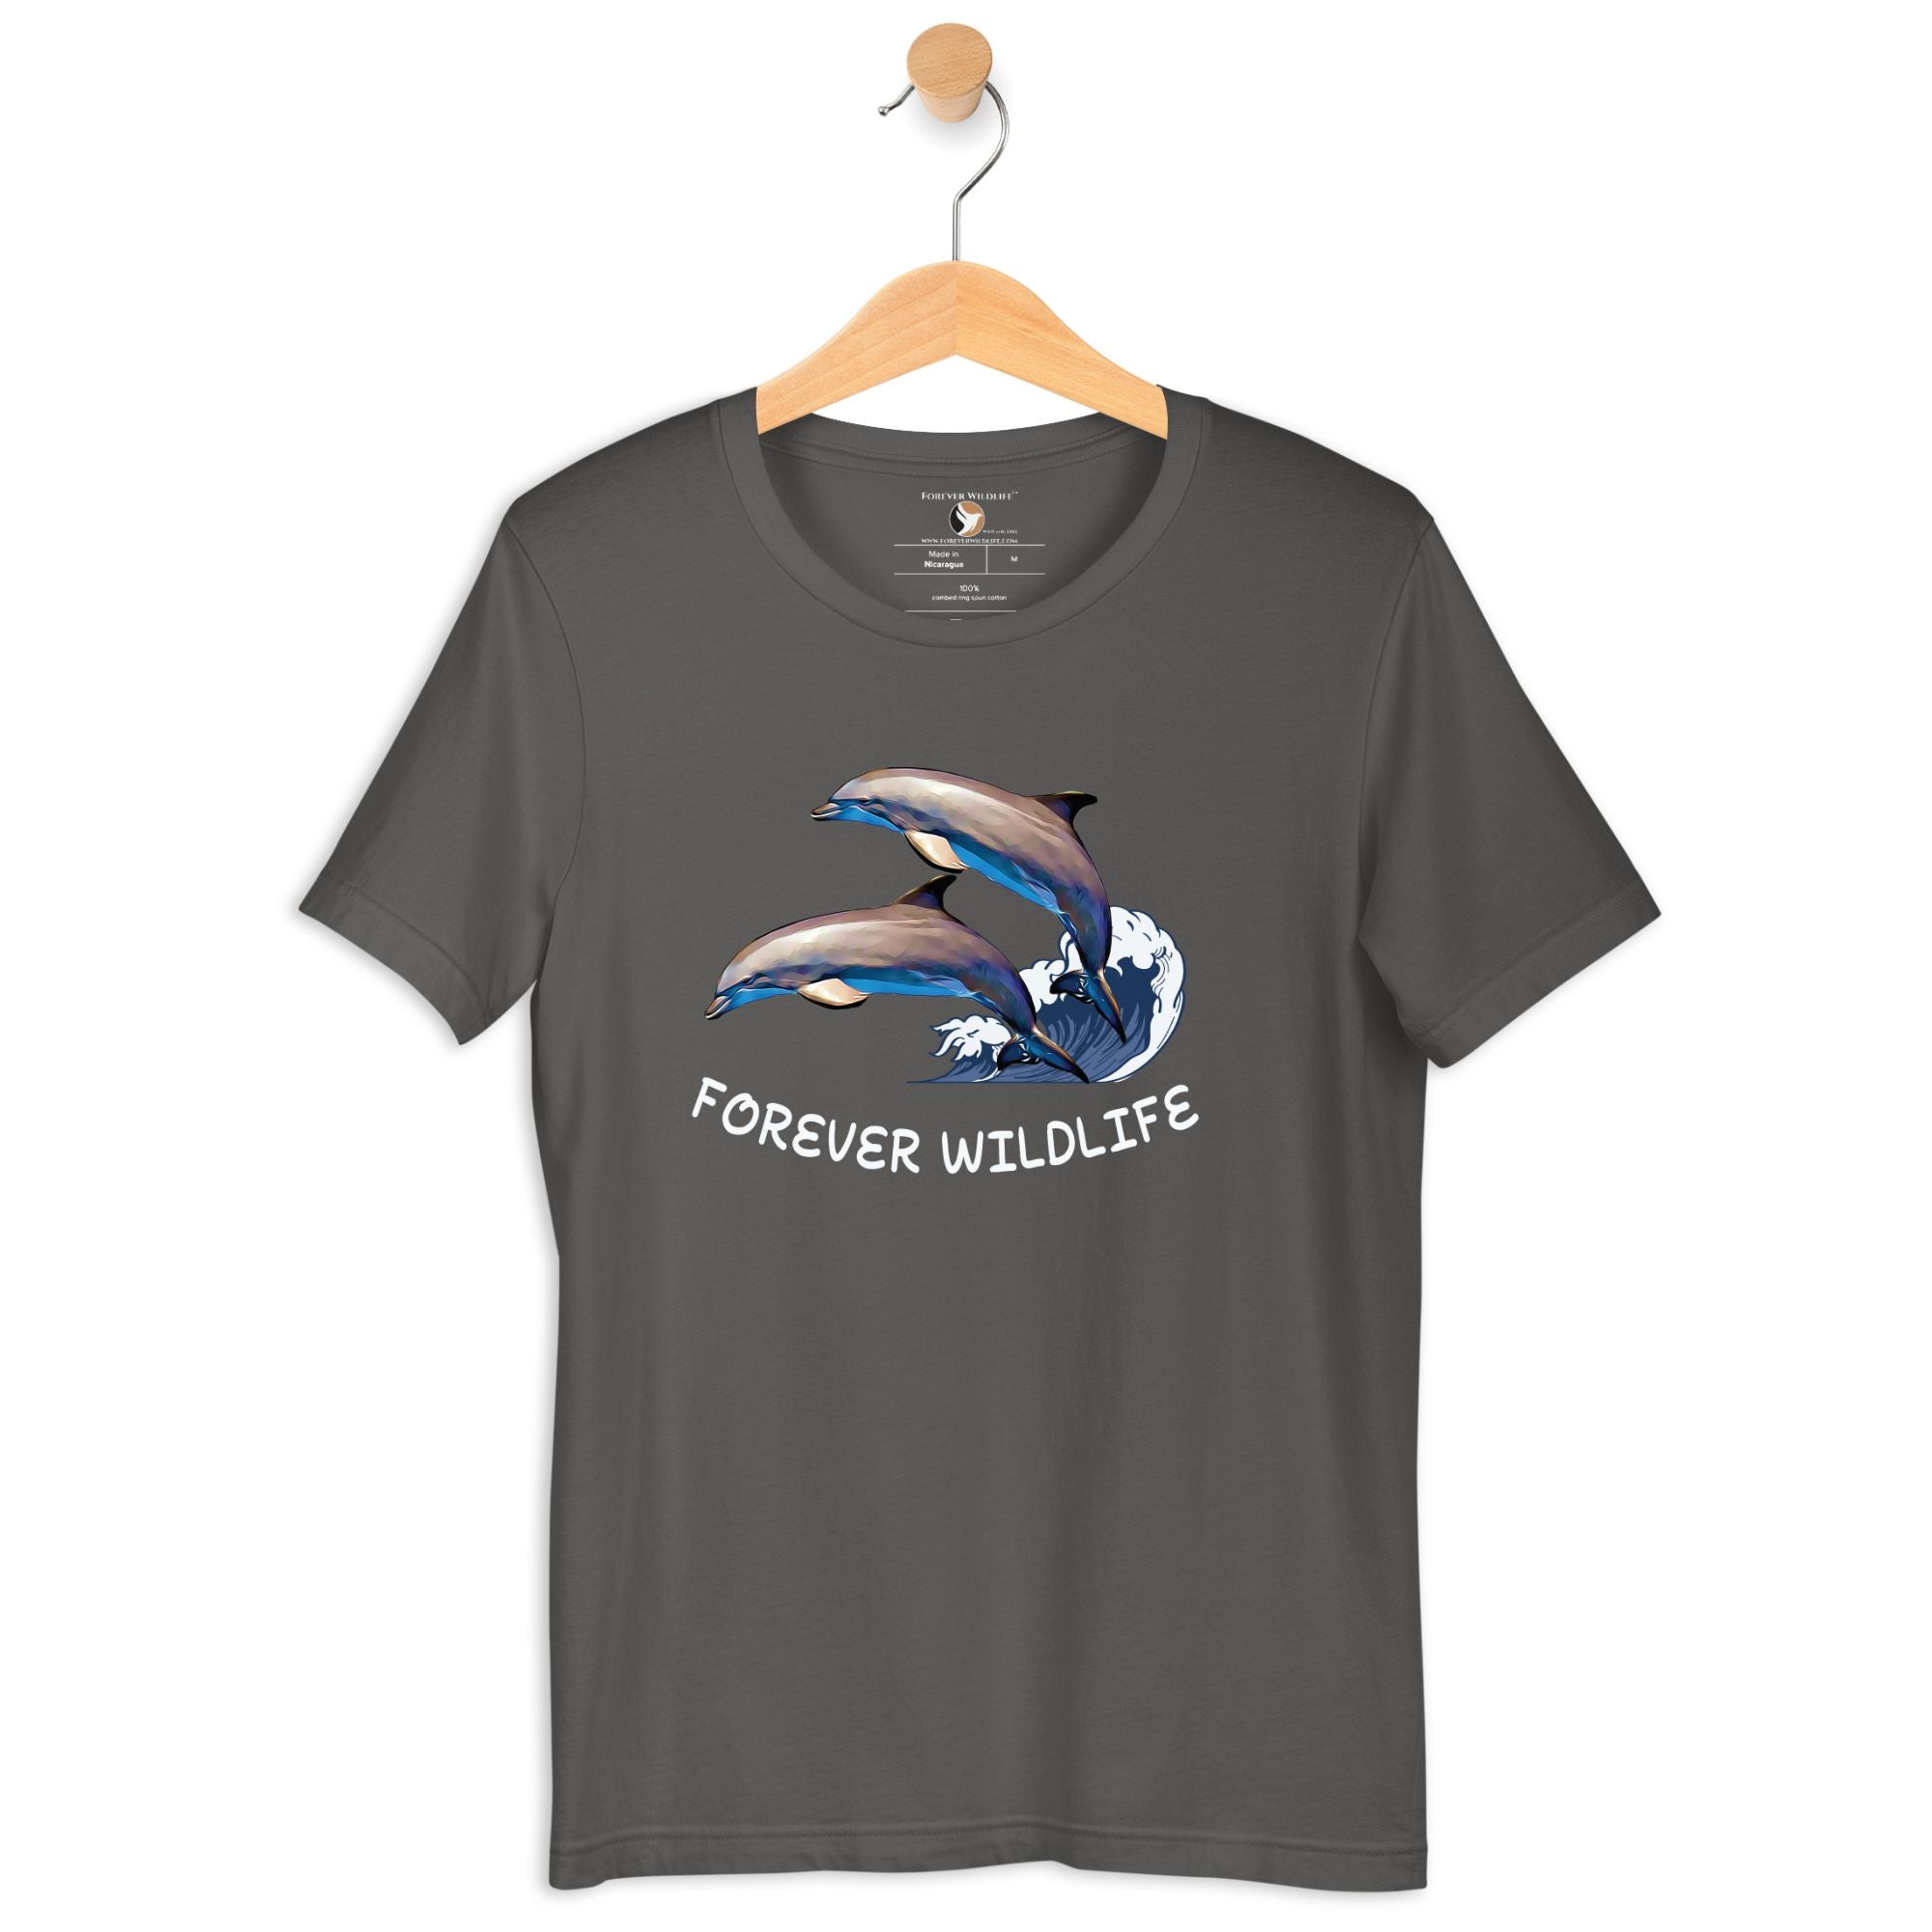 Dolphin T-Shirt in Asphalt – Premium Wildlife T-Shirt Design, Wildlife Clothing & Apparel from Forever Wildlife